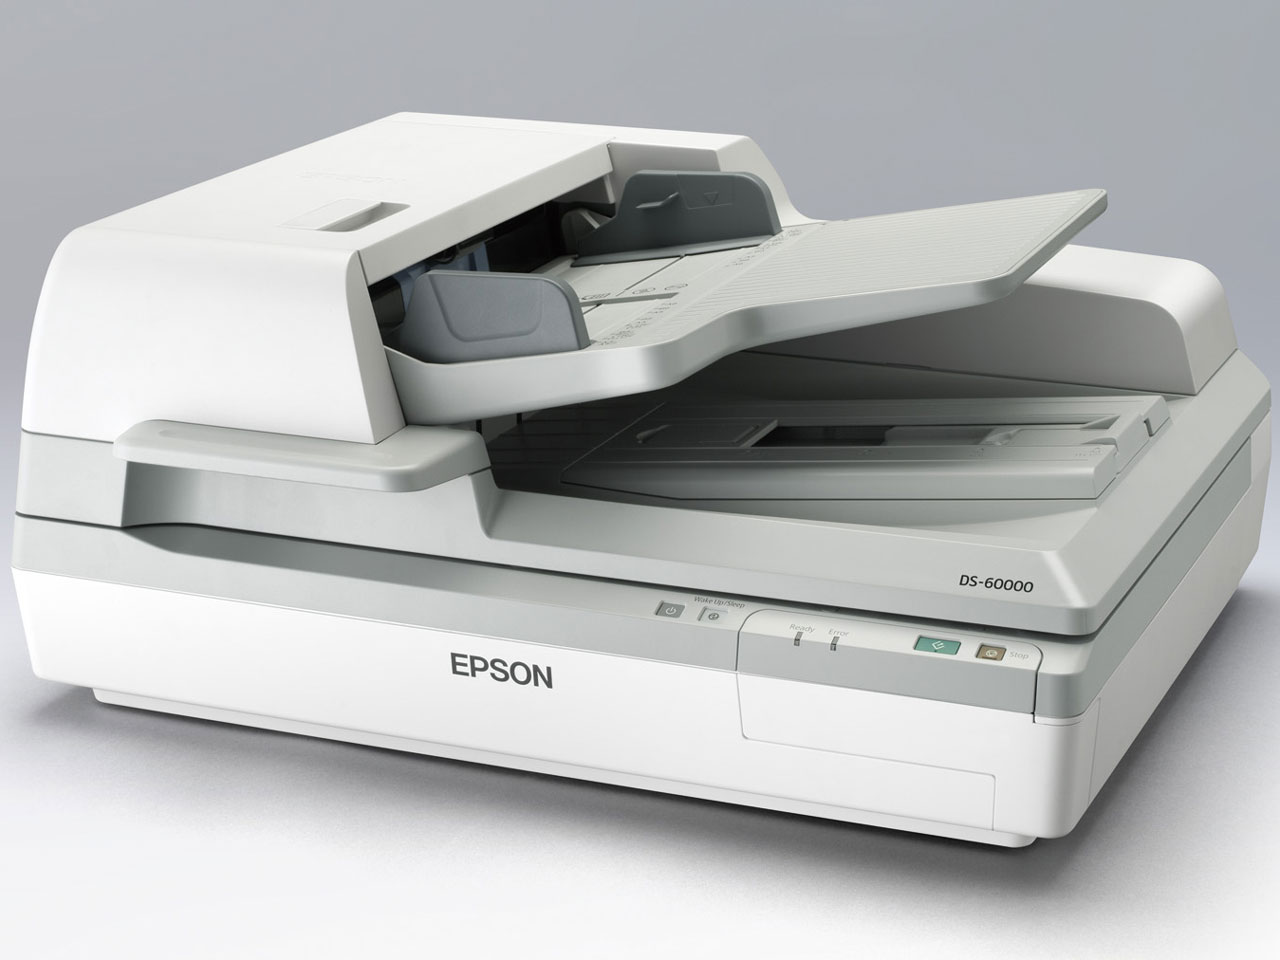 EPSON DS-600R1